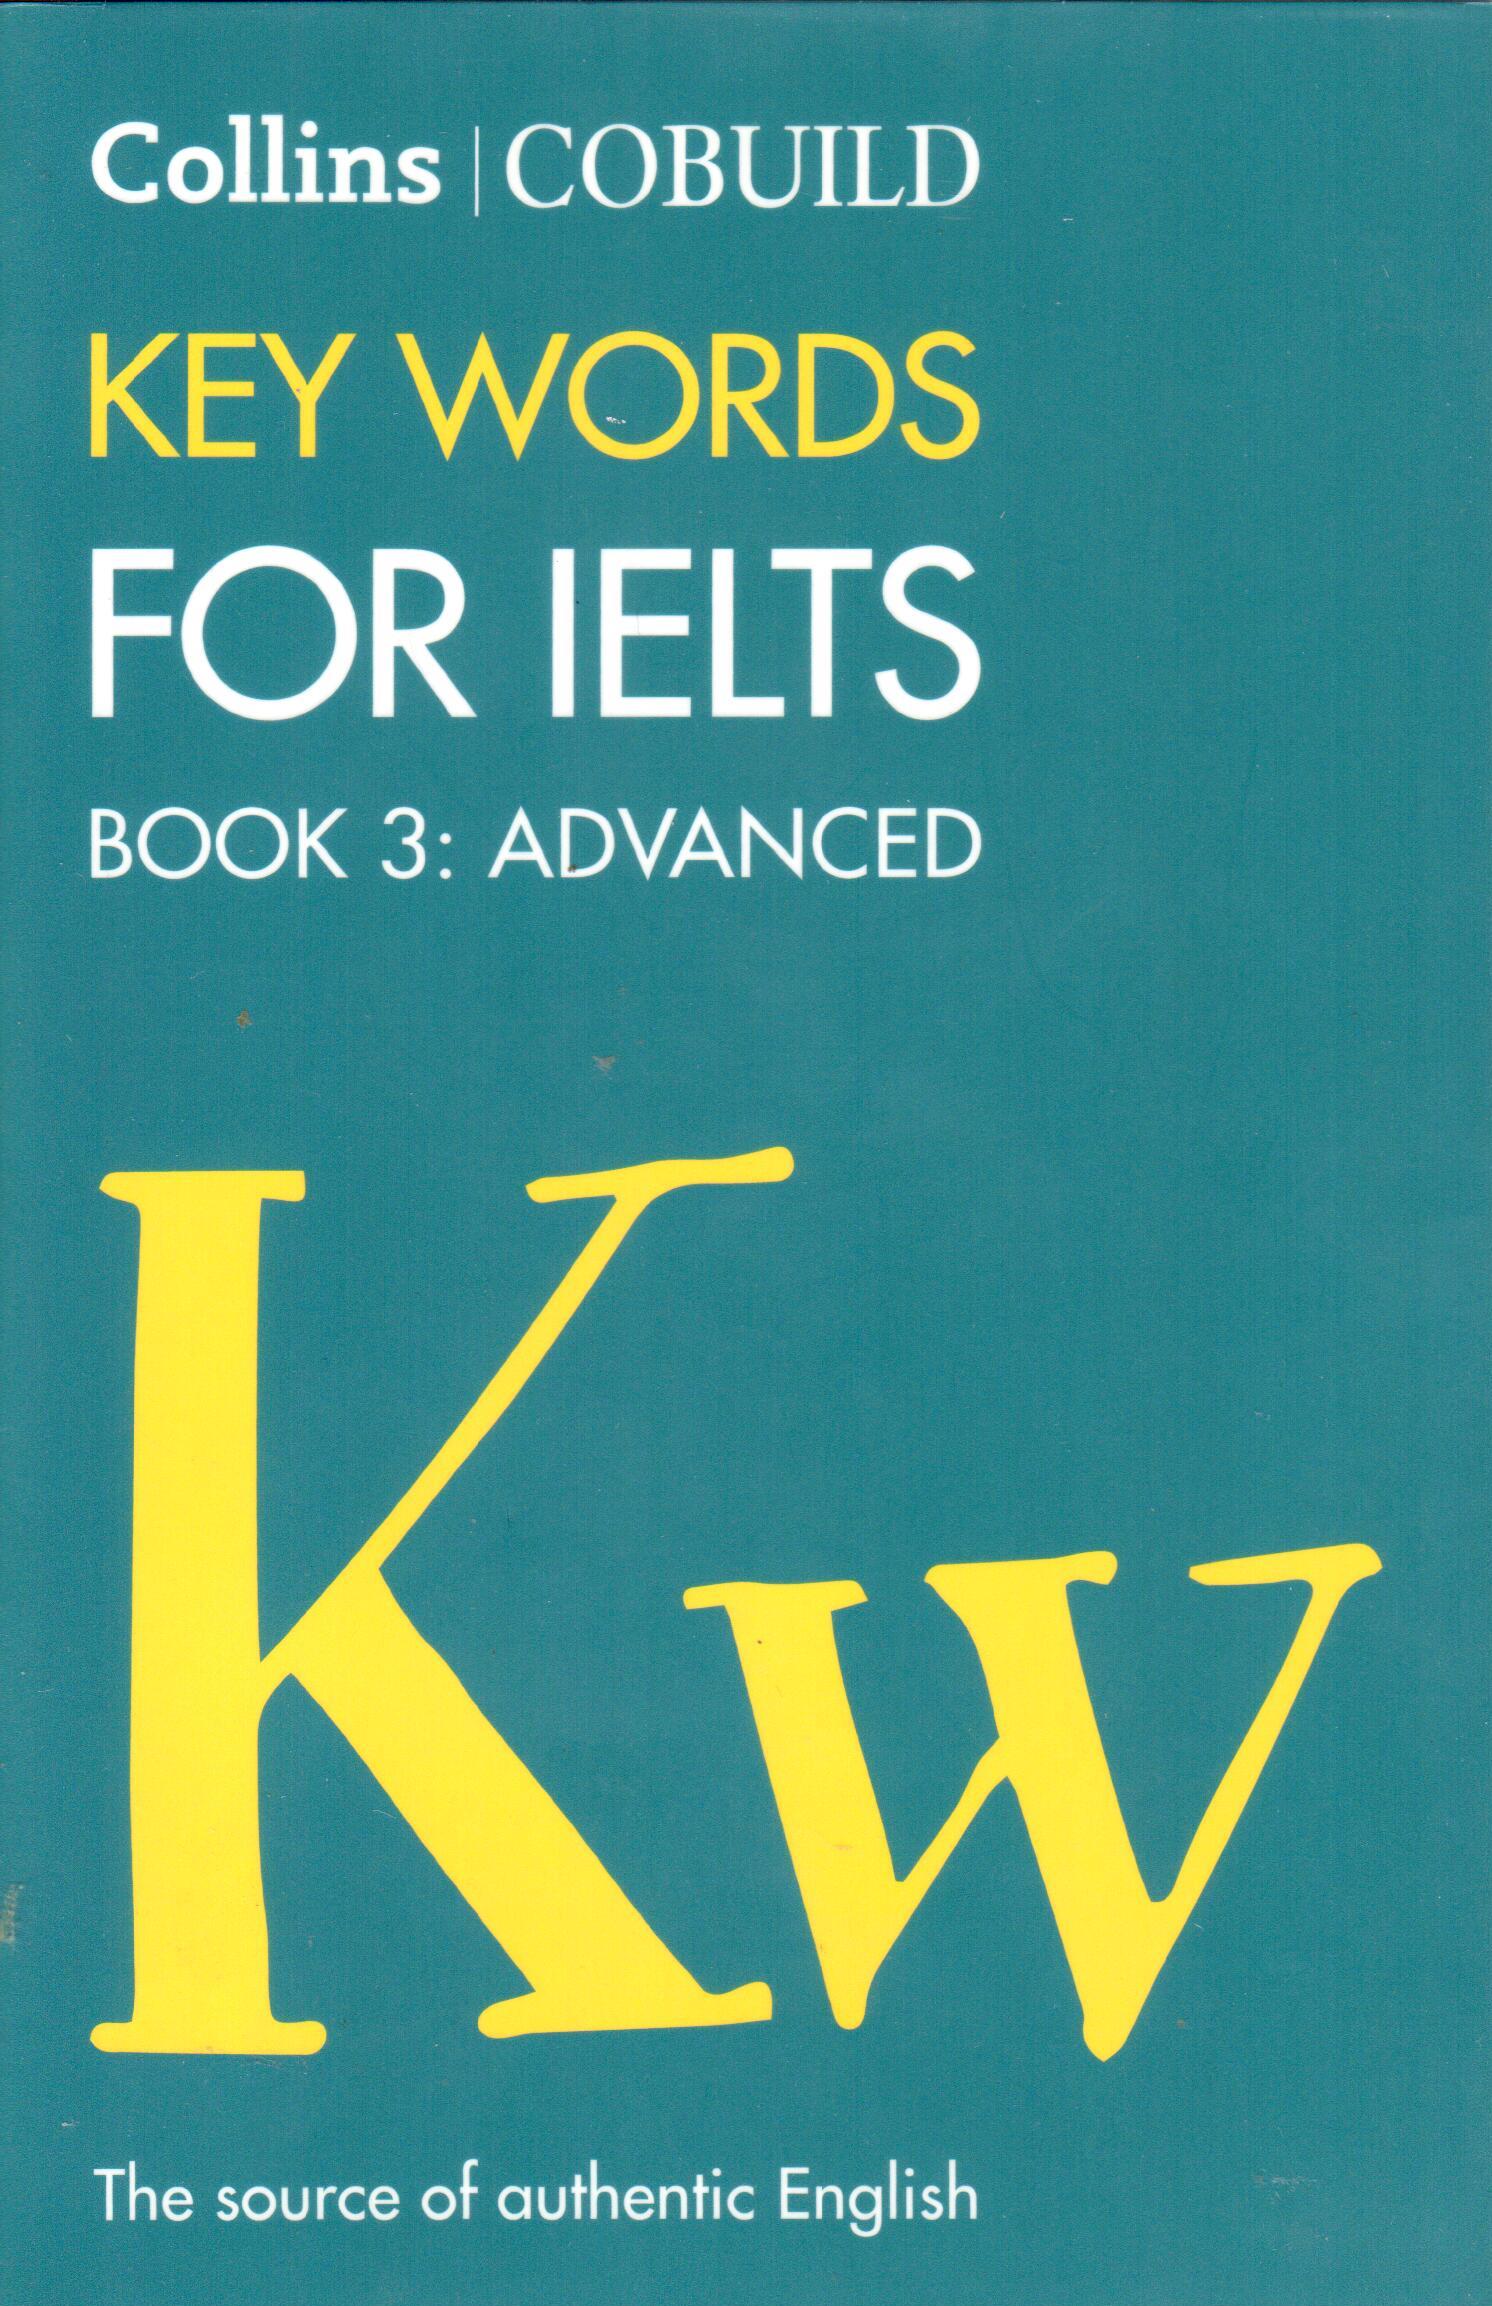 COBUILD Key Words for IELTS: Book 3 Advanced (Collins Cobuild)